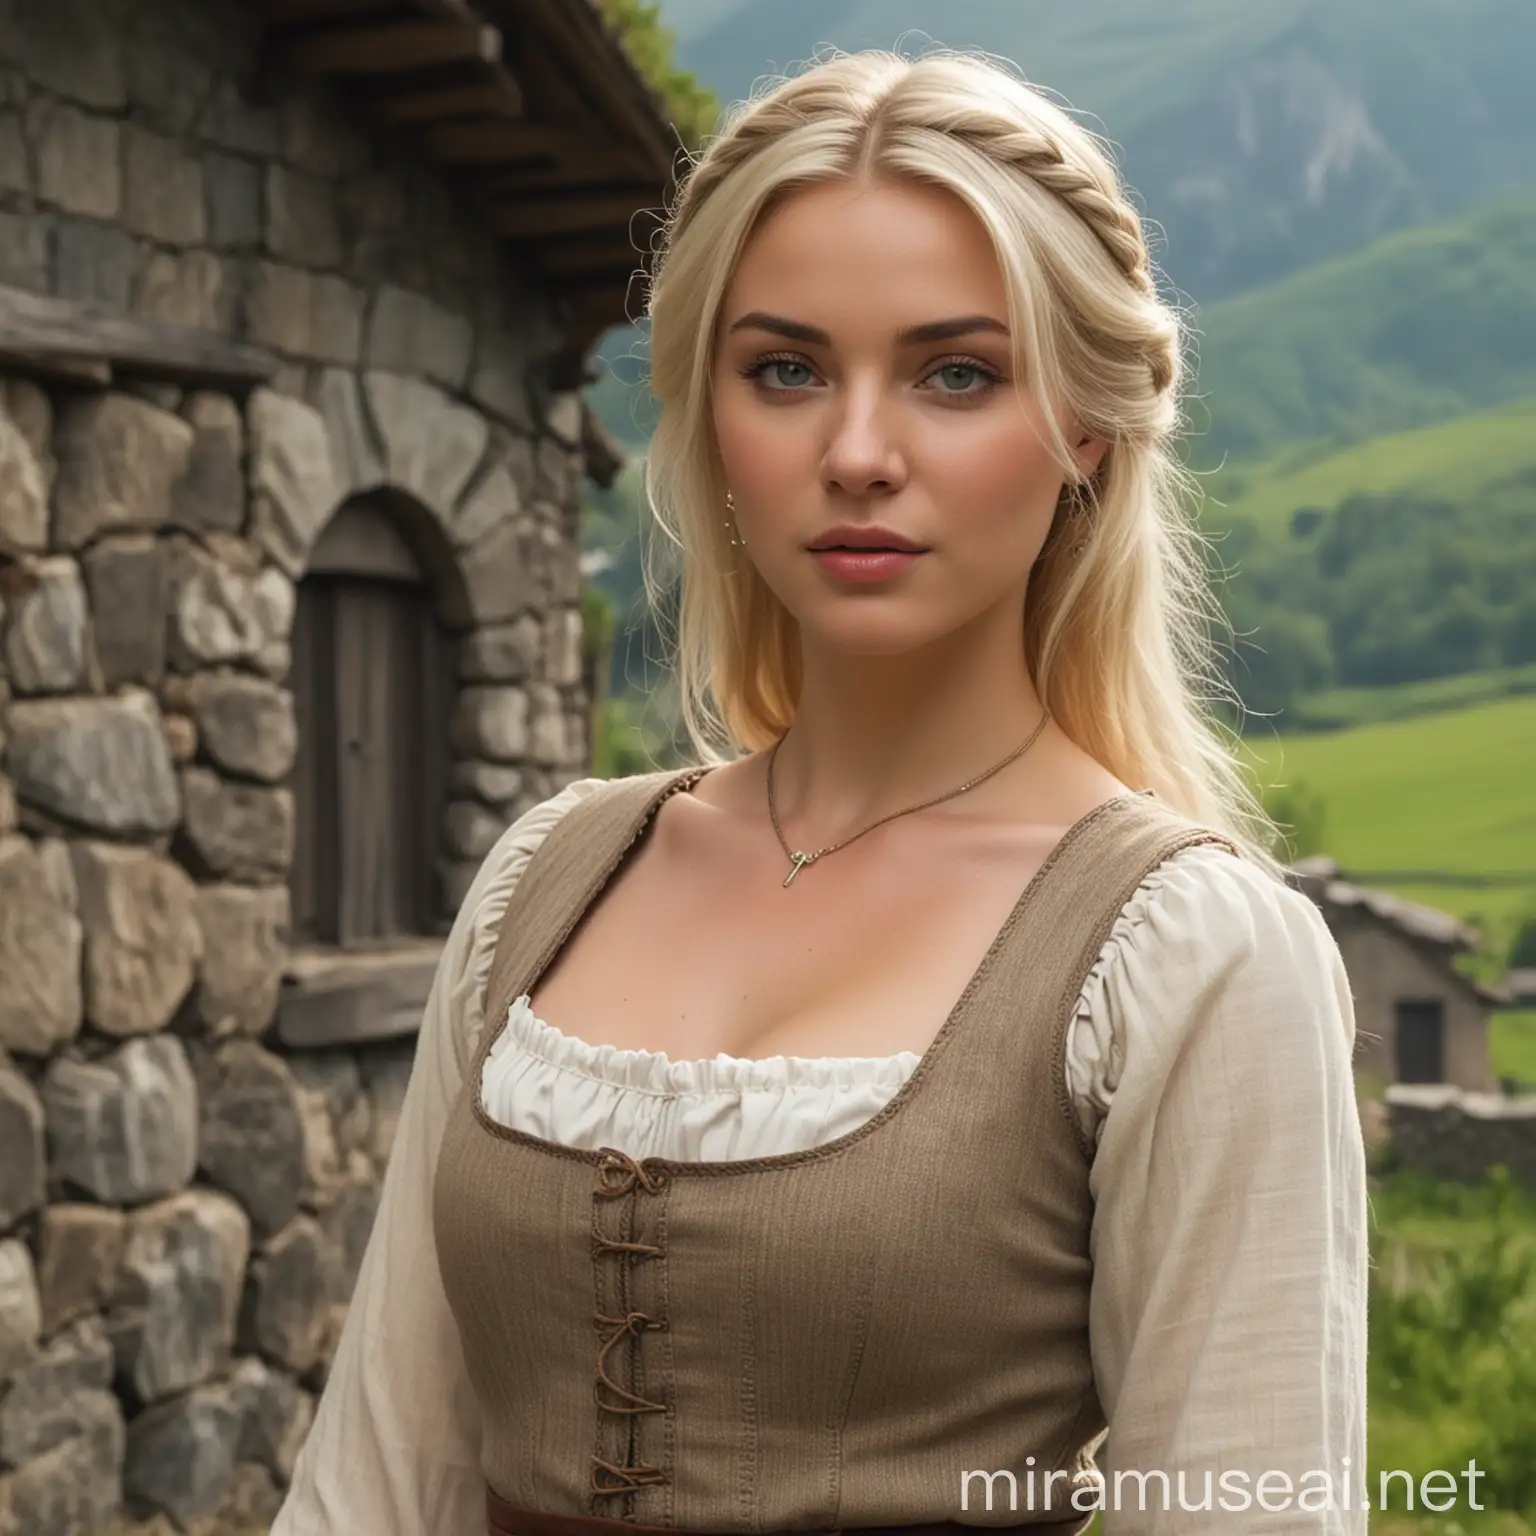 Blonde villager woman, sexy, fantasy movie